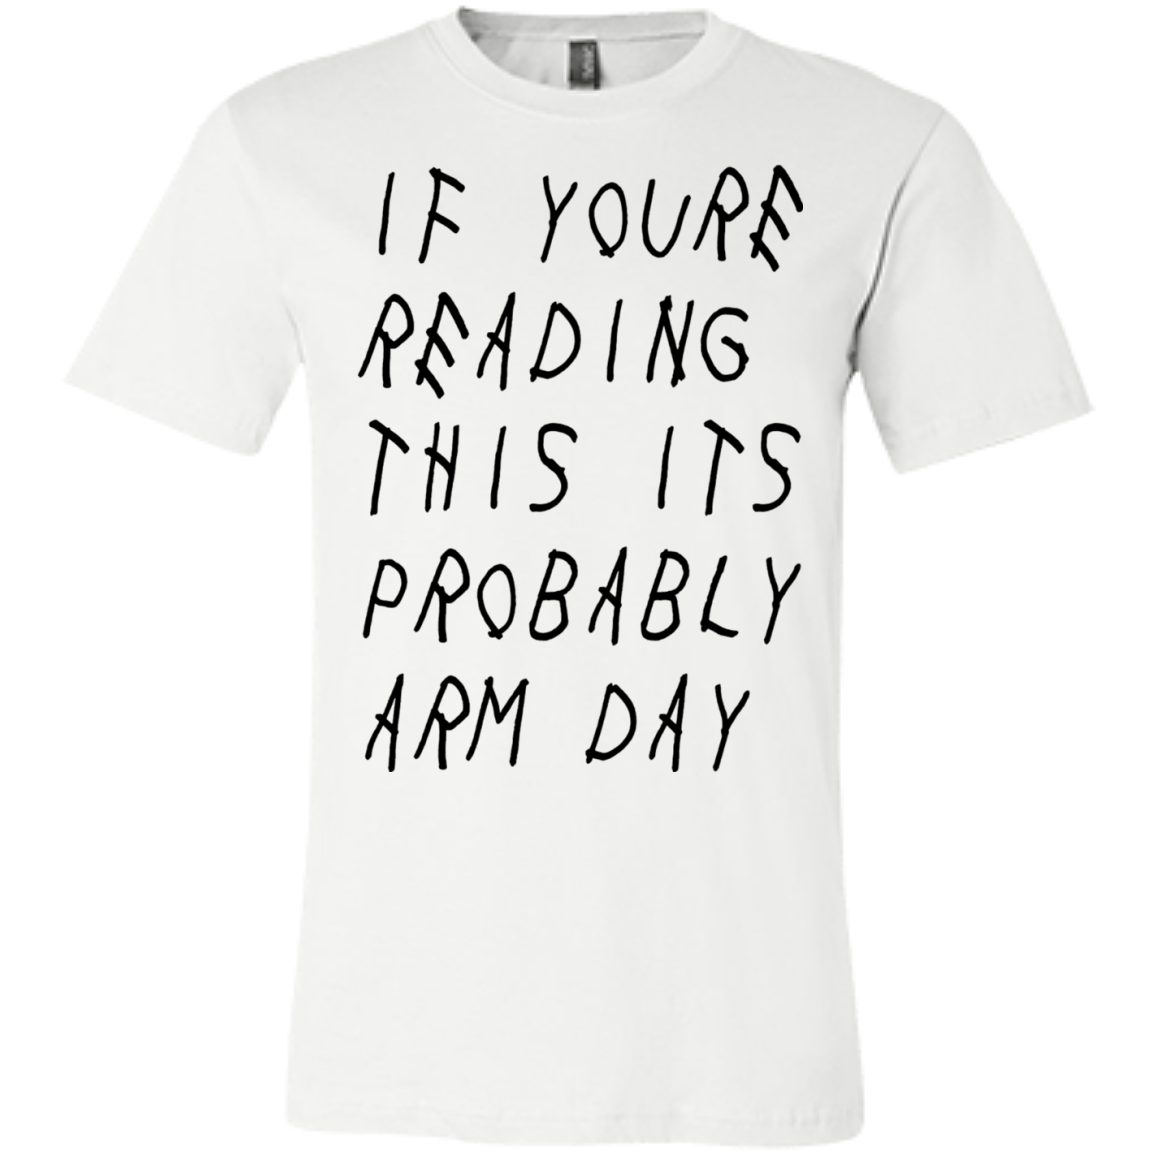 Arm Day Short-Sleeve T-Shirt BLK